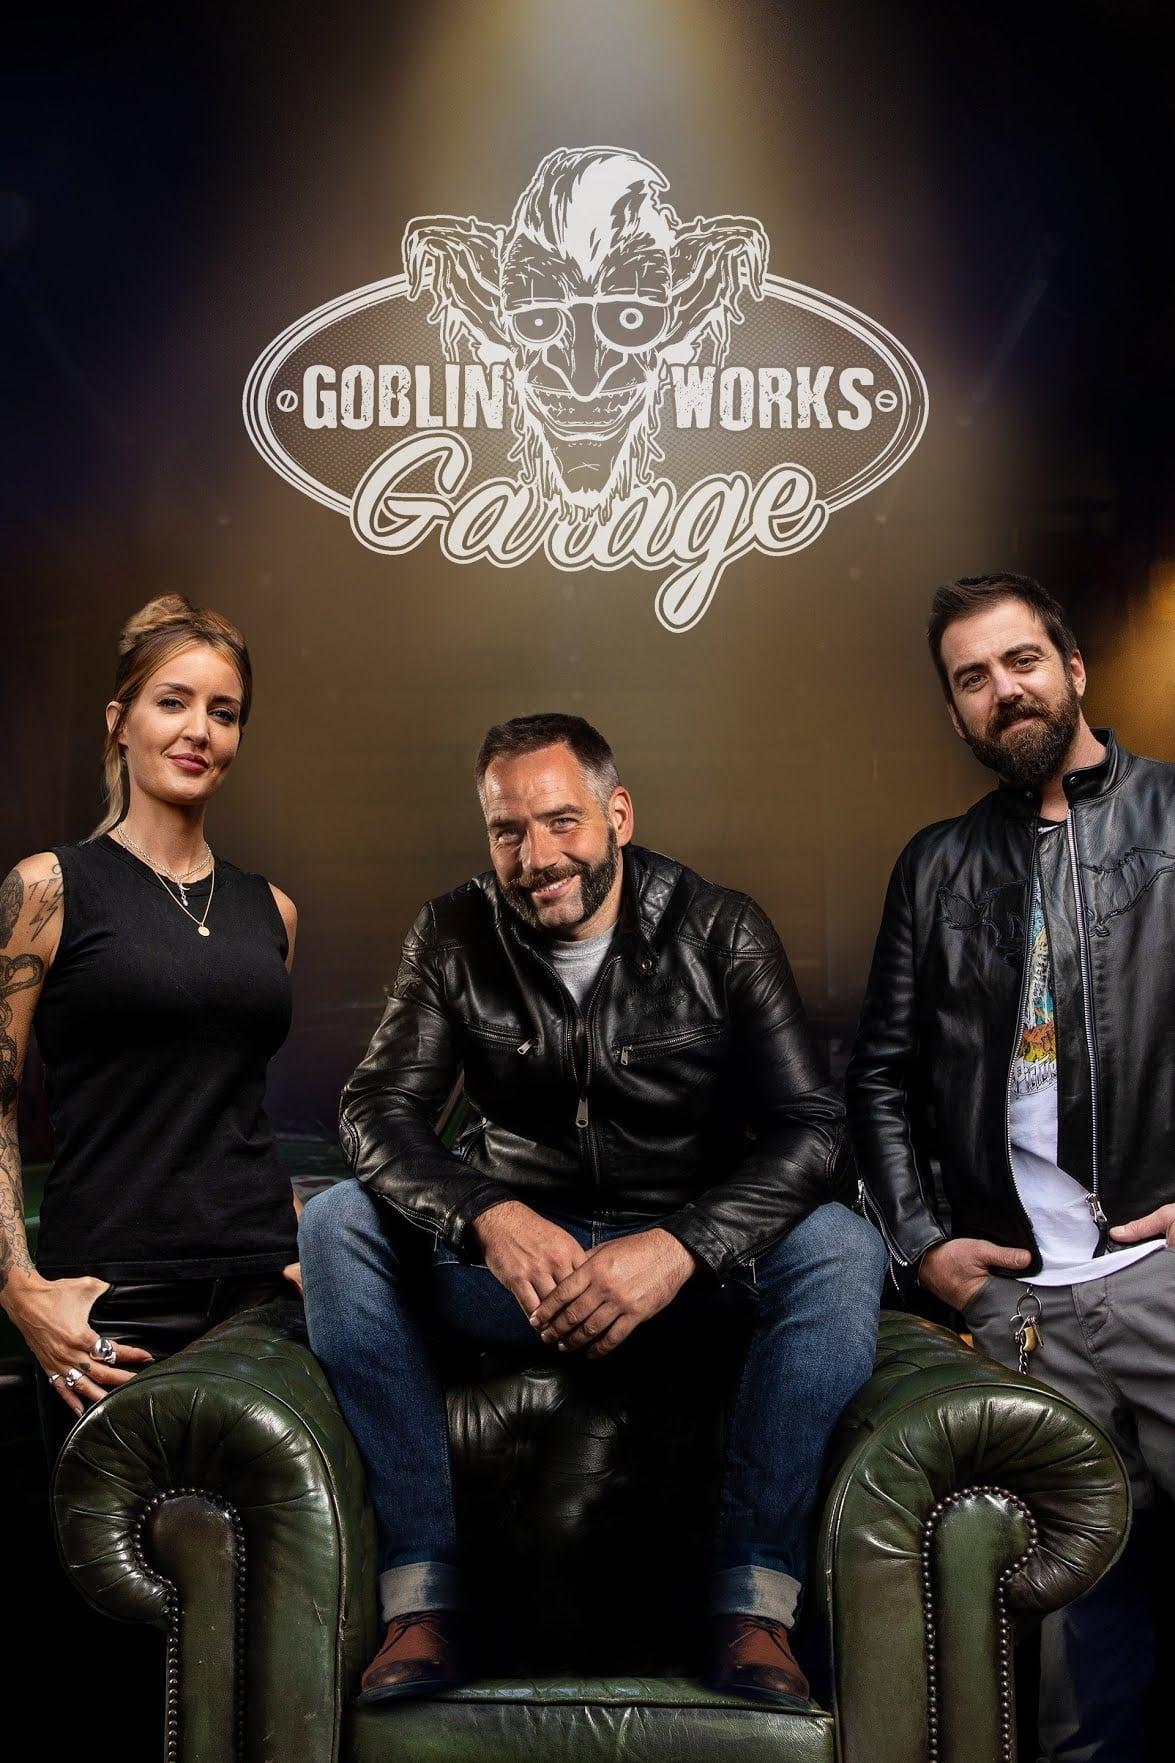 Goblin Works Garage poster